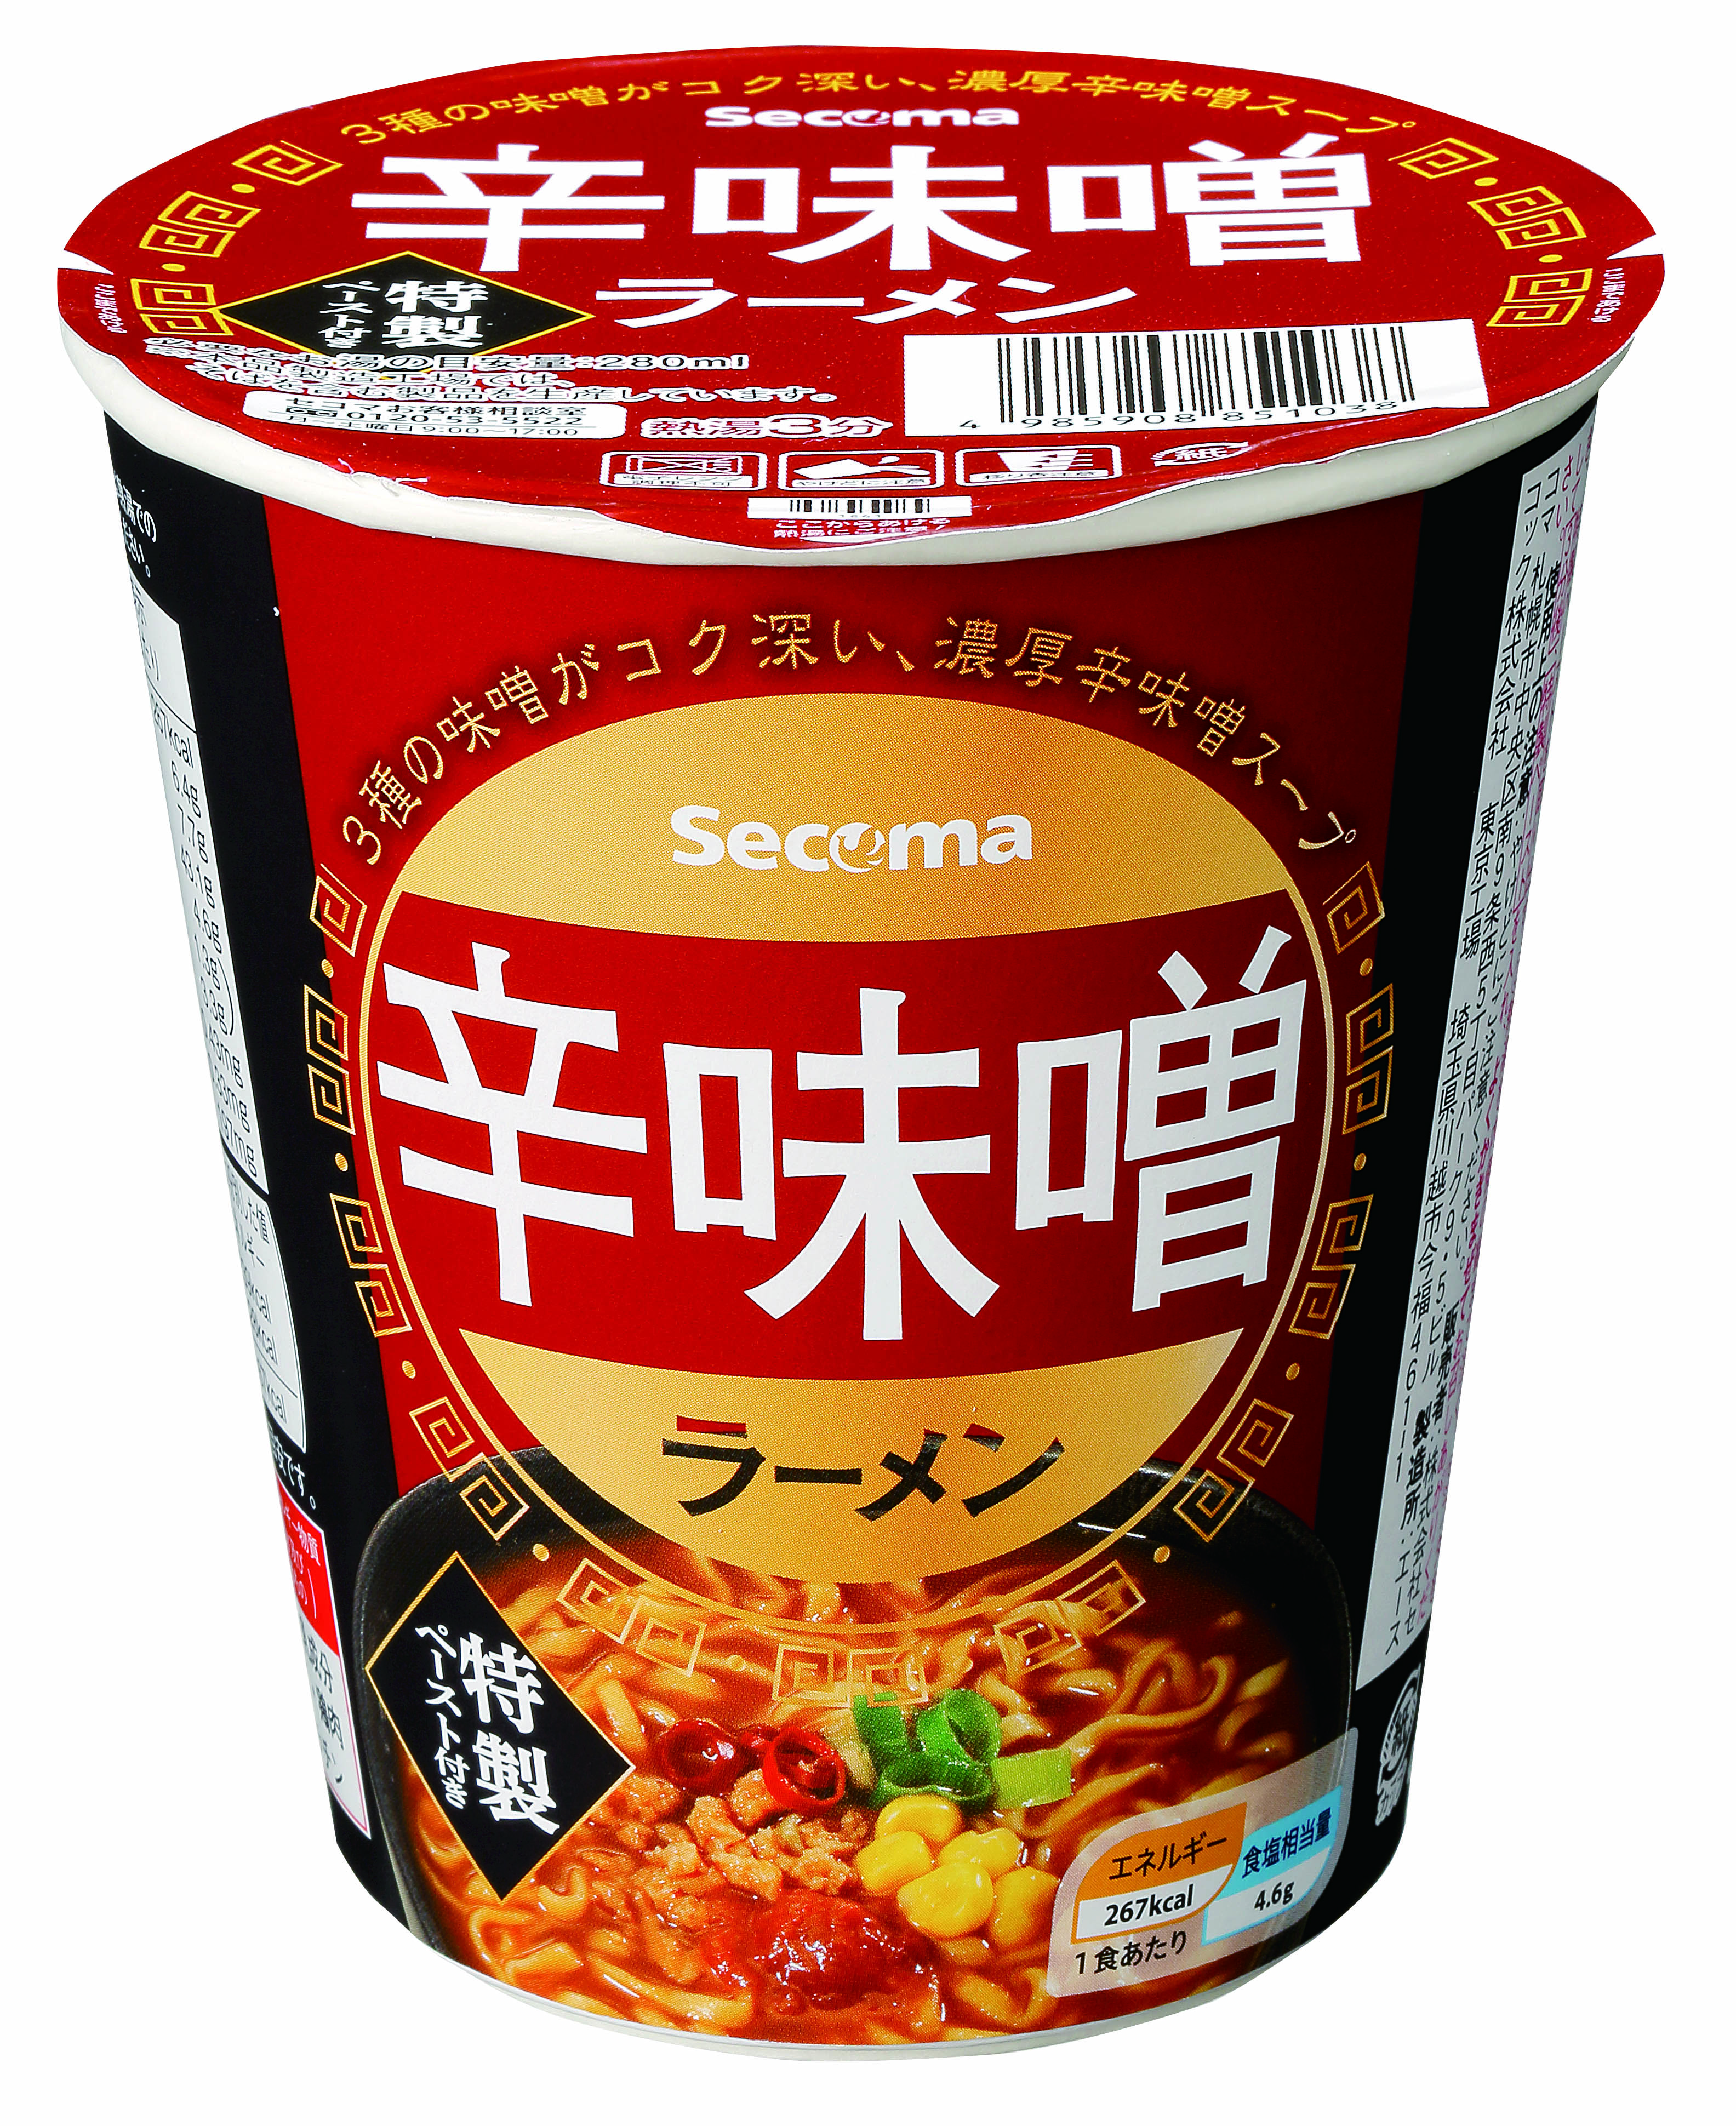 Secoma 辛味噌ラーメン 12個入 - セイコーマート公式通販